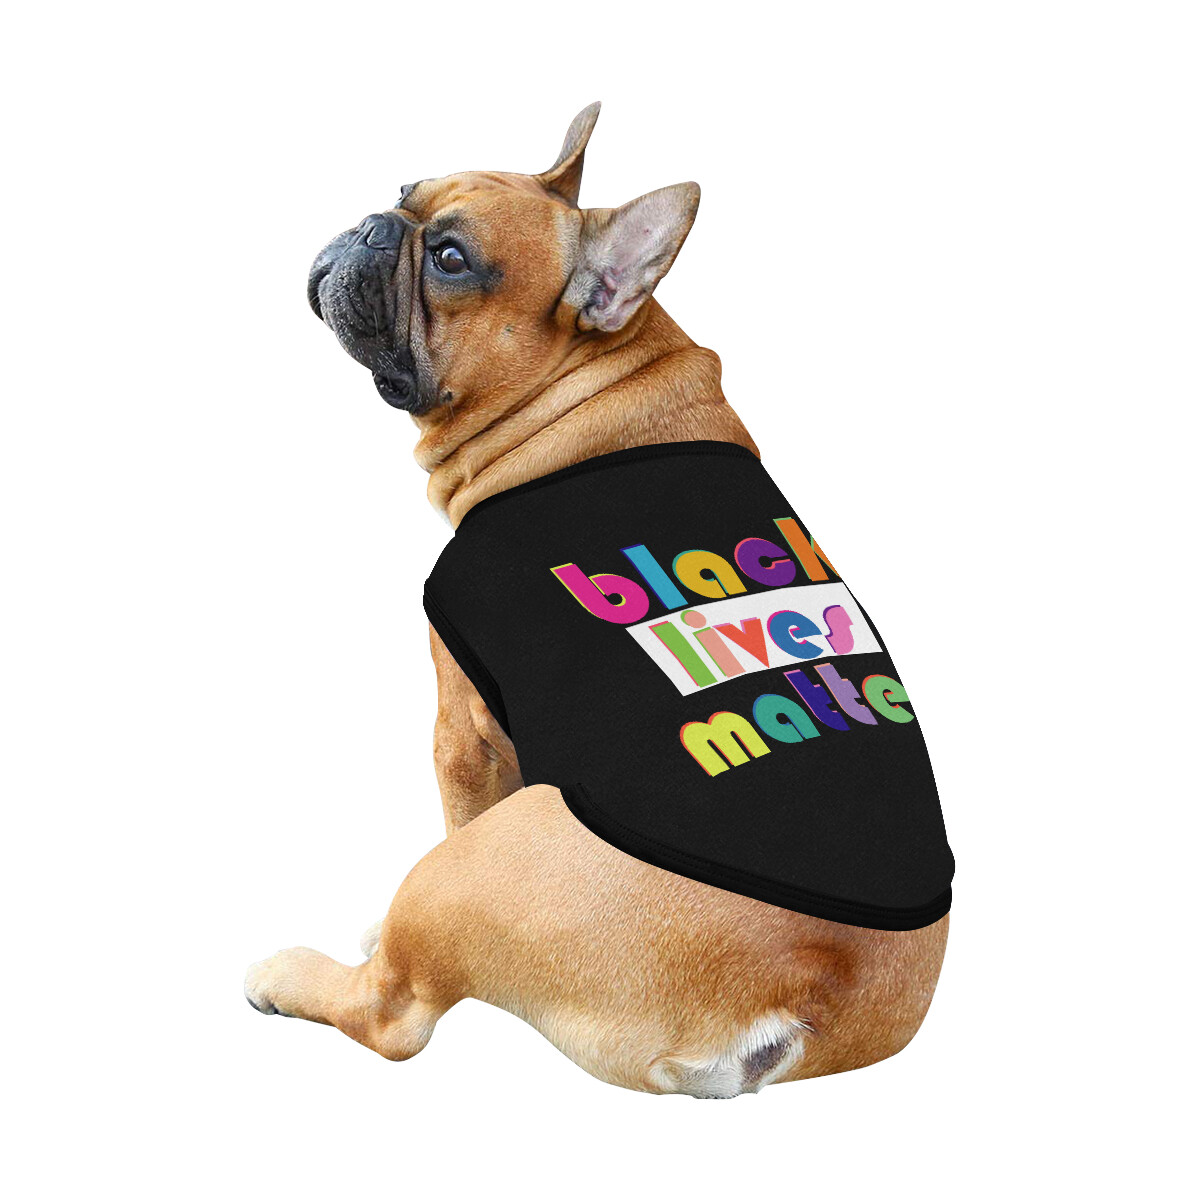 🐕 Black lives Matter Dog Tank Top, Dog shirt, Dog clothes, Gifts, front back print, 7 sizes XS to 3XL black